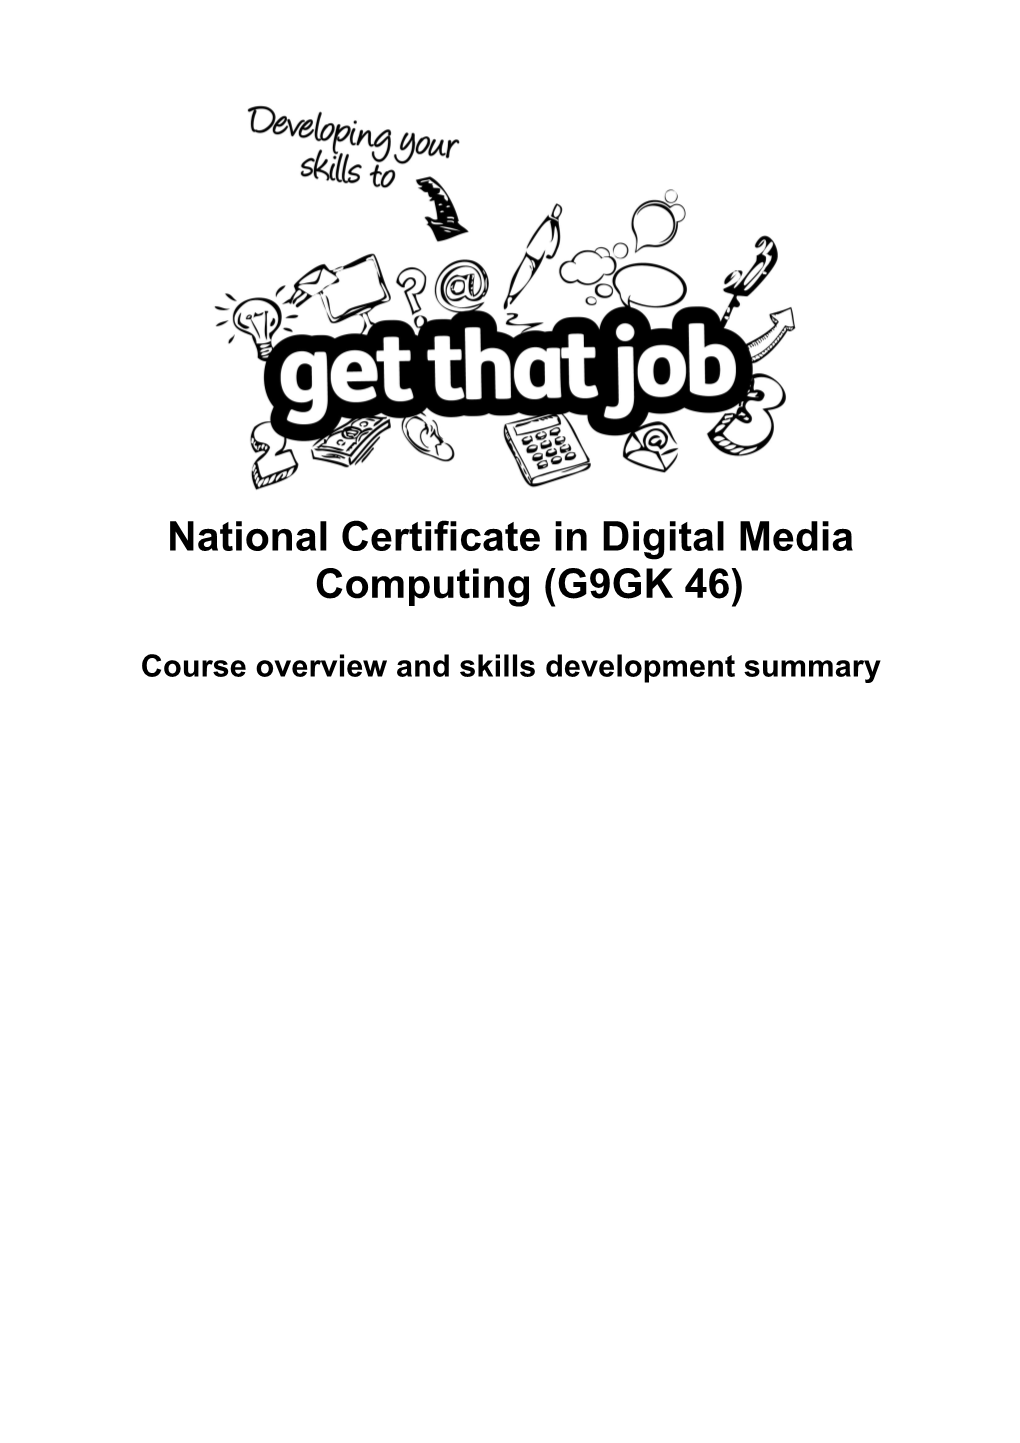 National Certificate in Digital Media Computing (G9GK 46)